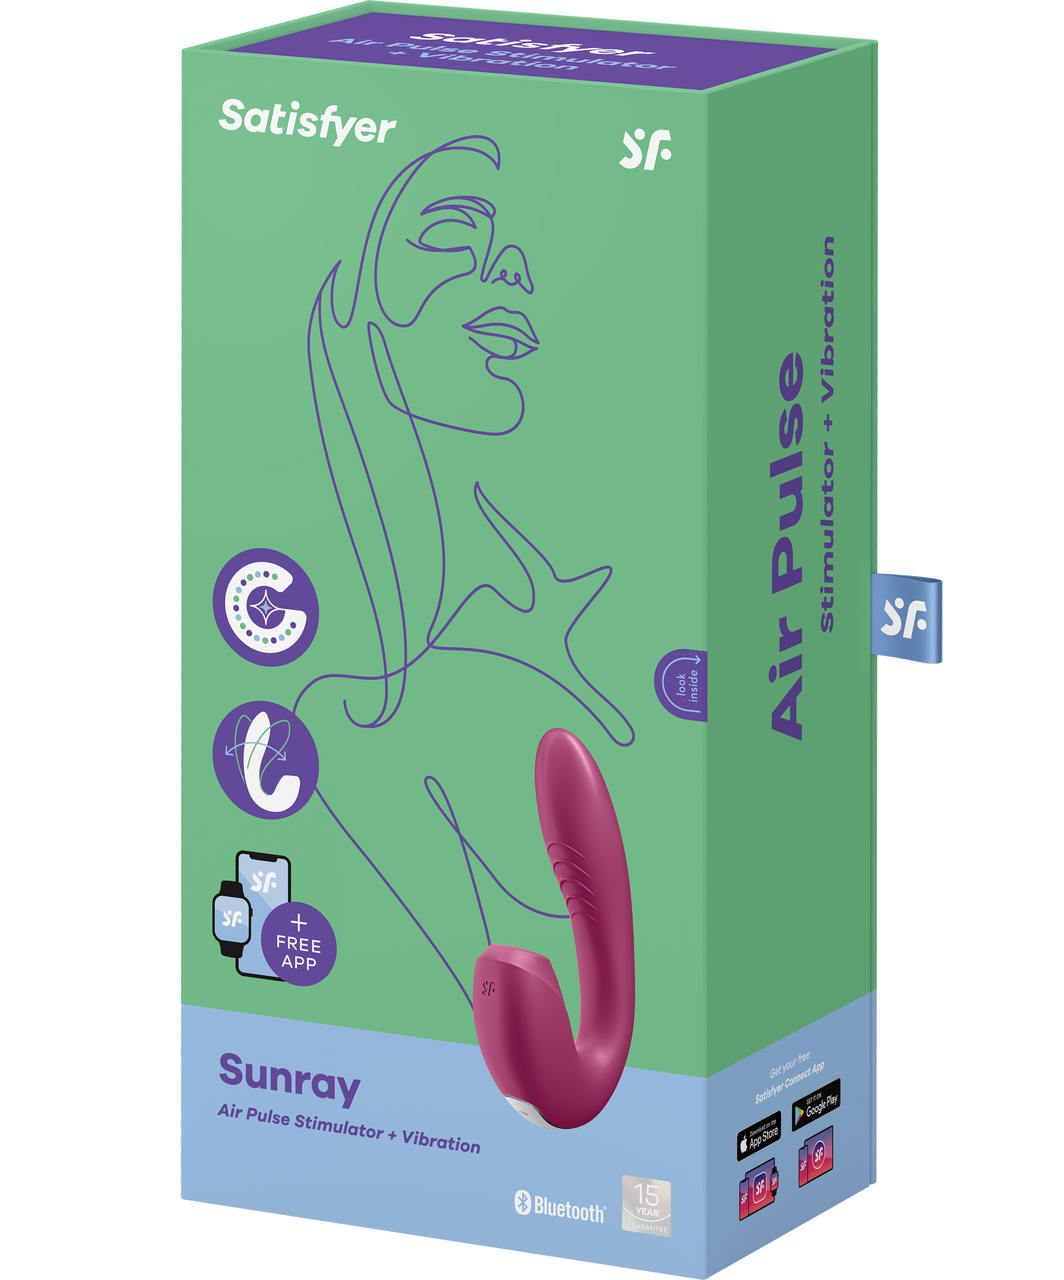 Satisfyer Sunray Air Pulse Stimulator & Vibrator